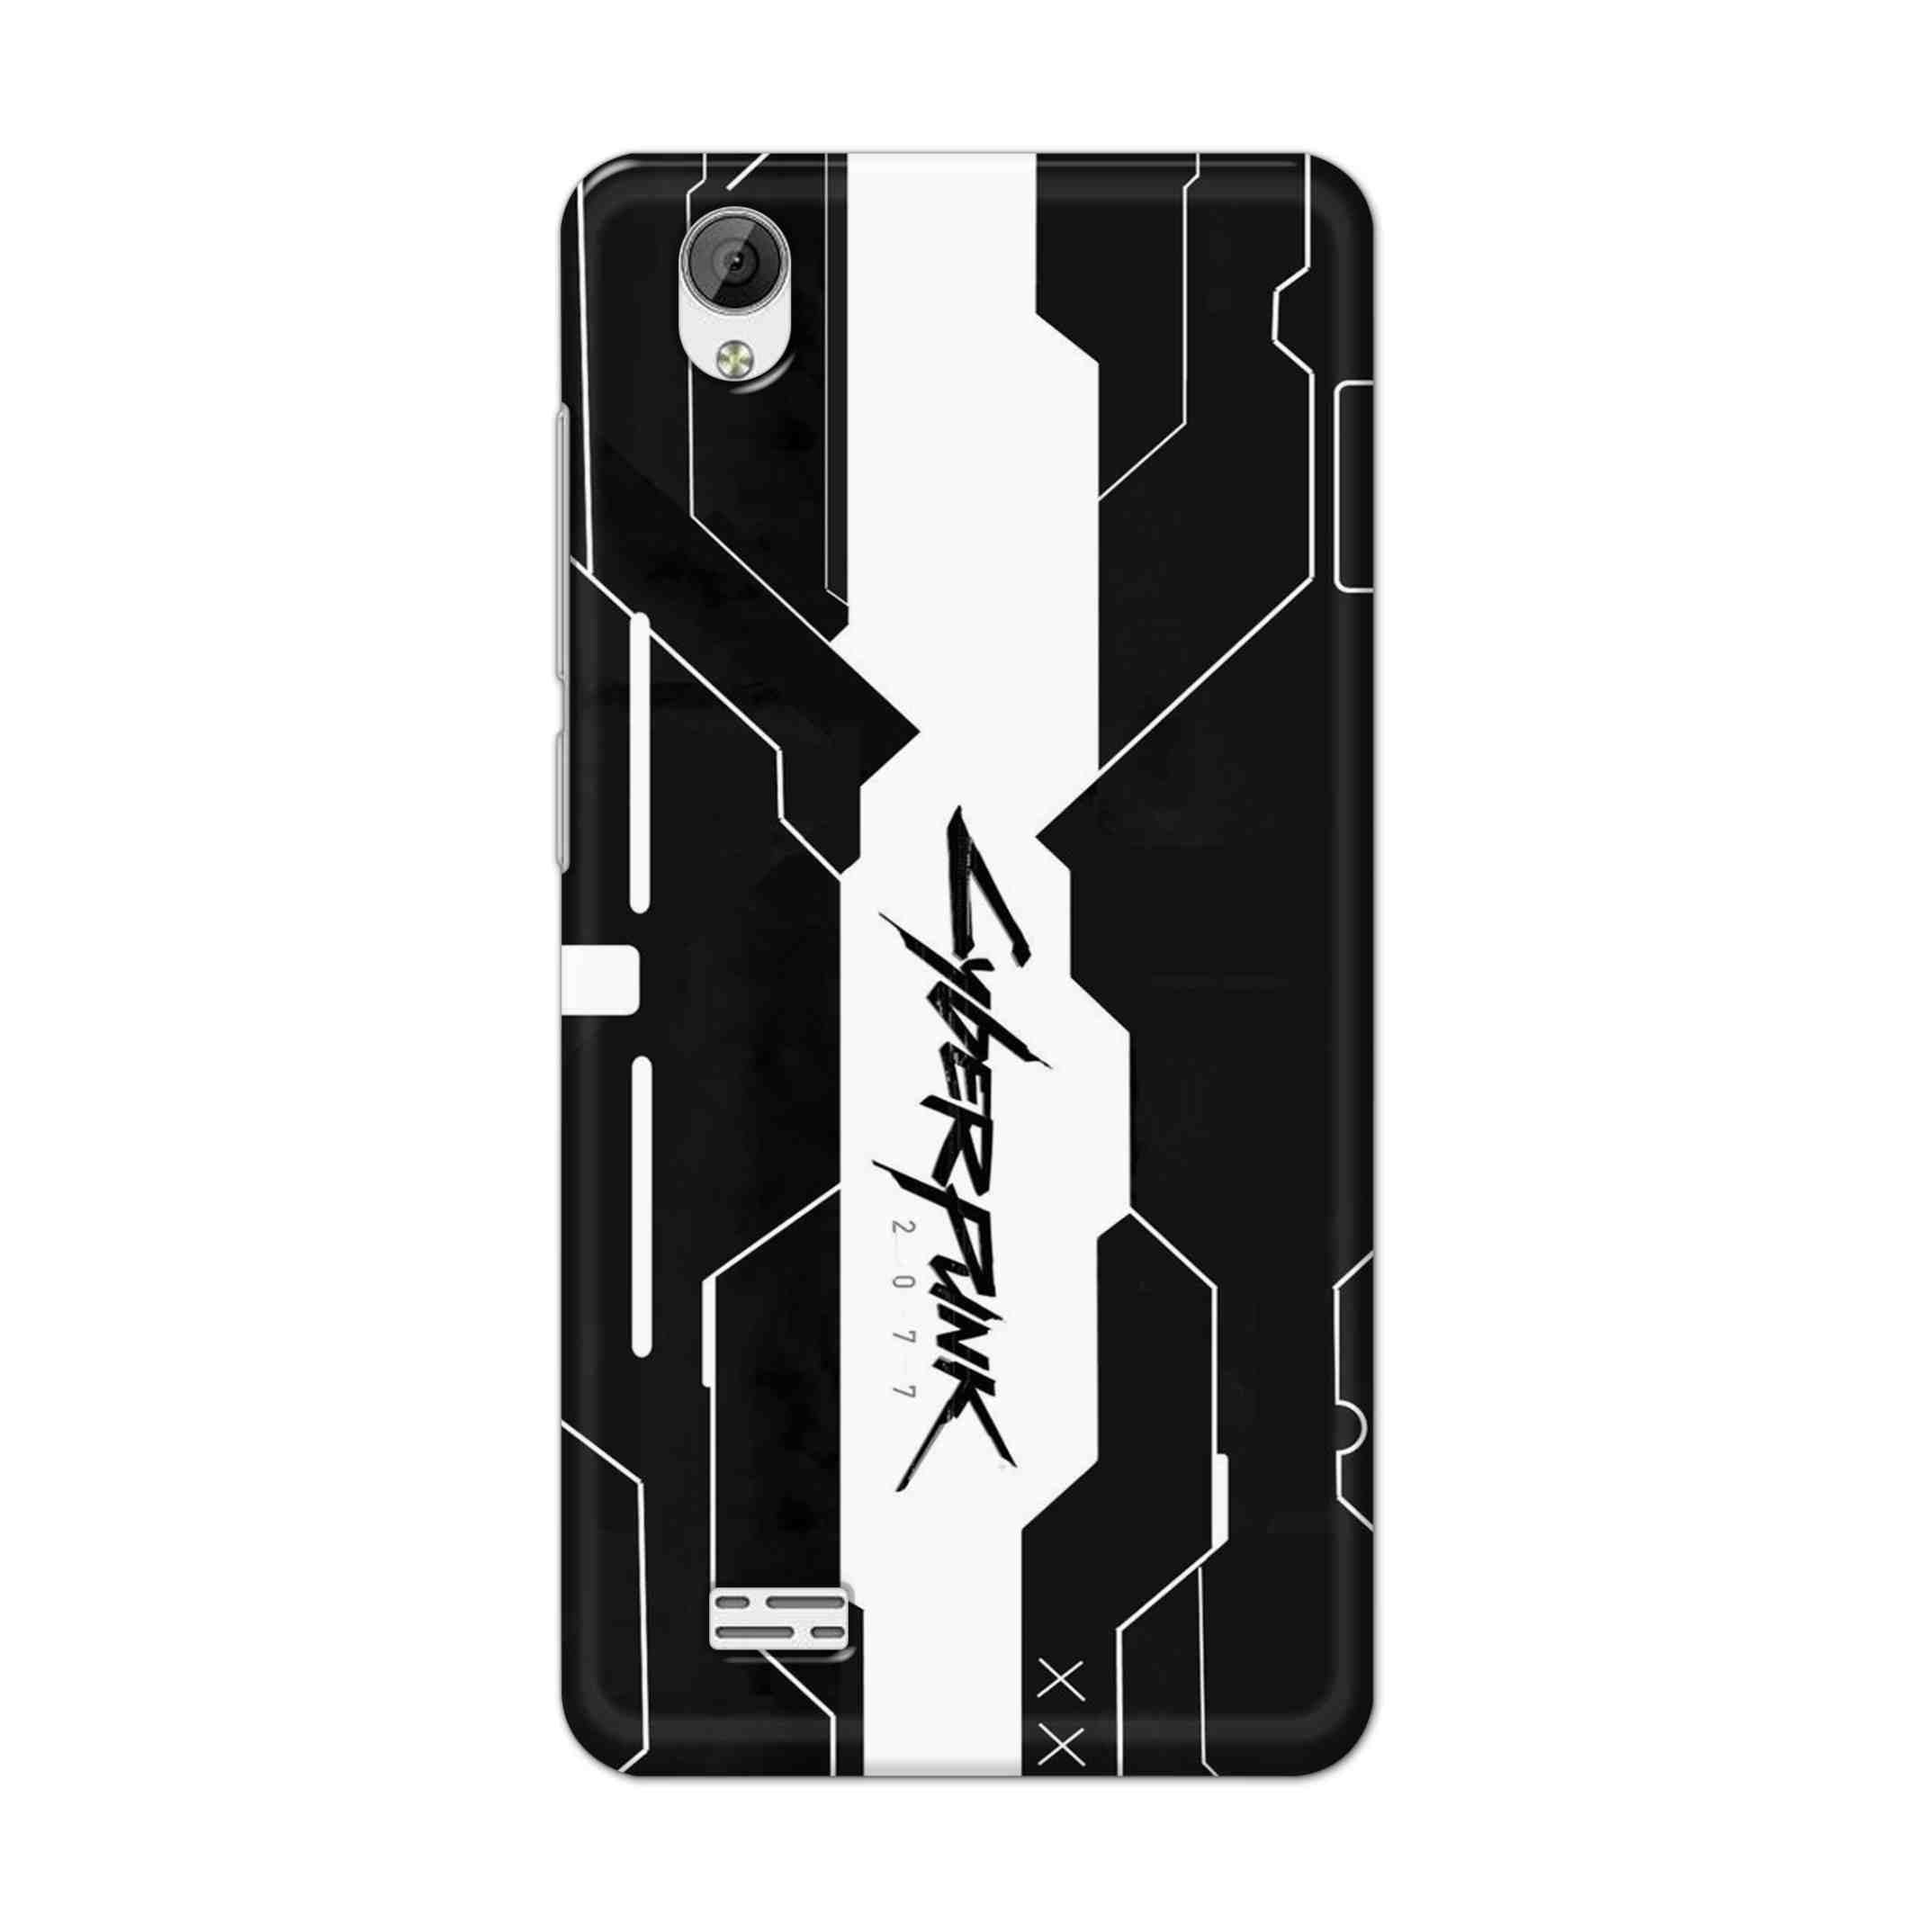 Buy Cyberpunk 2077 Art Hard Back Mobile Phone Case Cover For Vivo Y31 Online